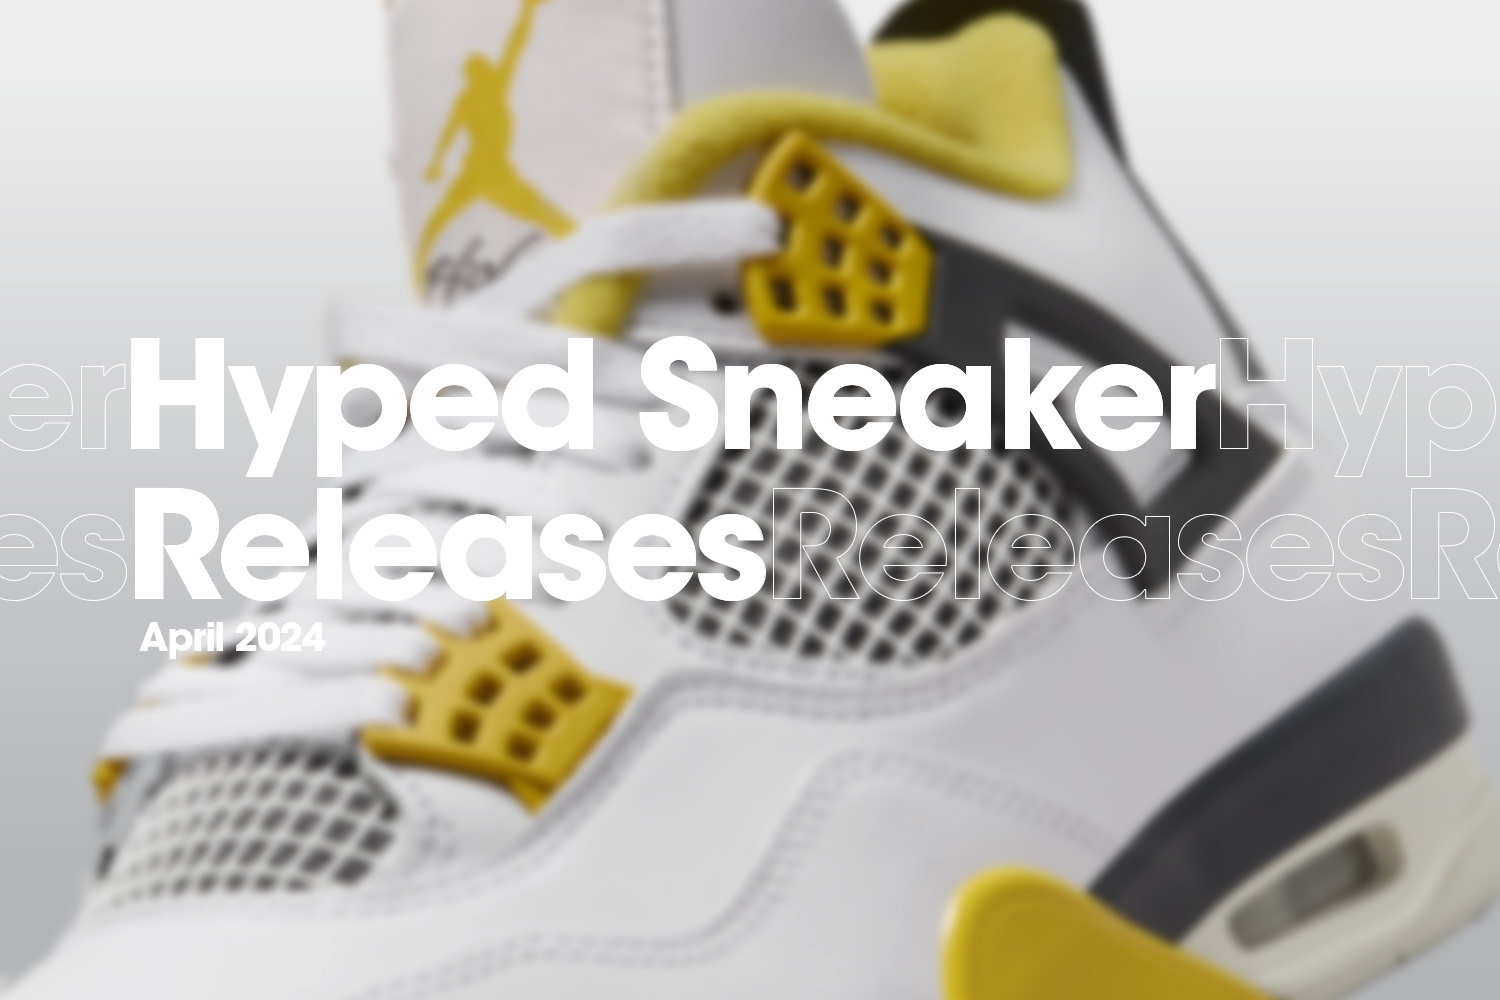 Hyped Sneaker Releases van april 2024